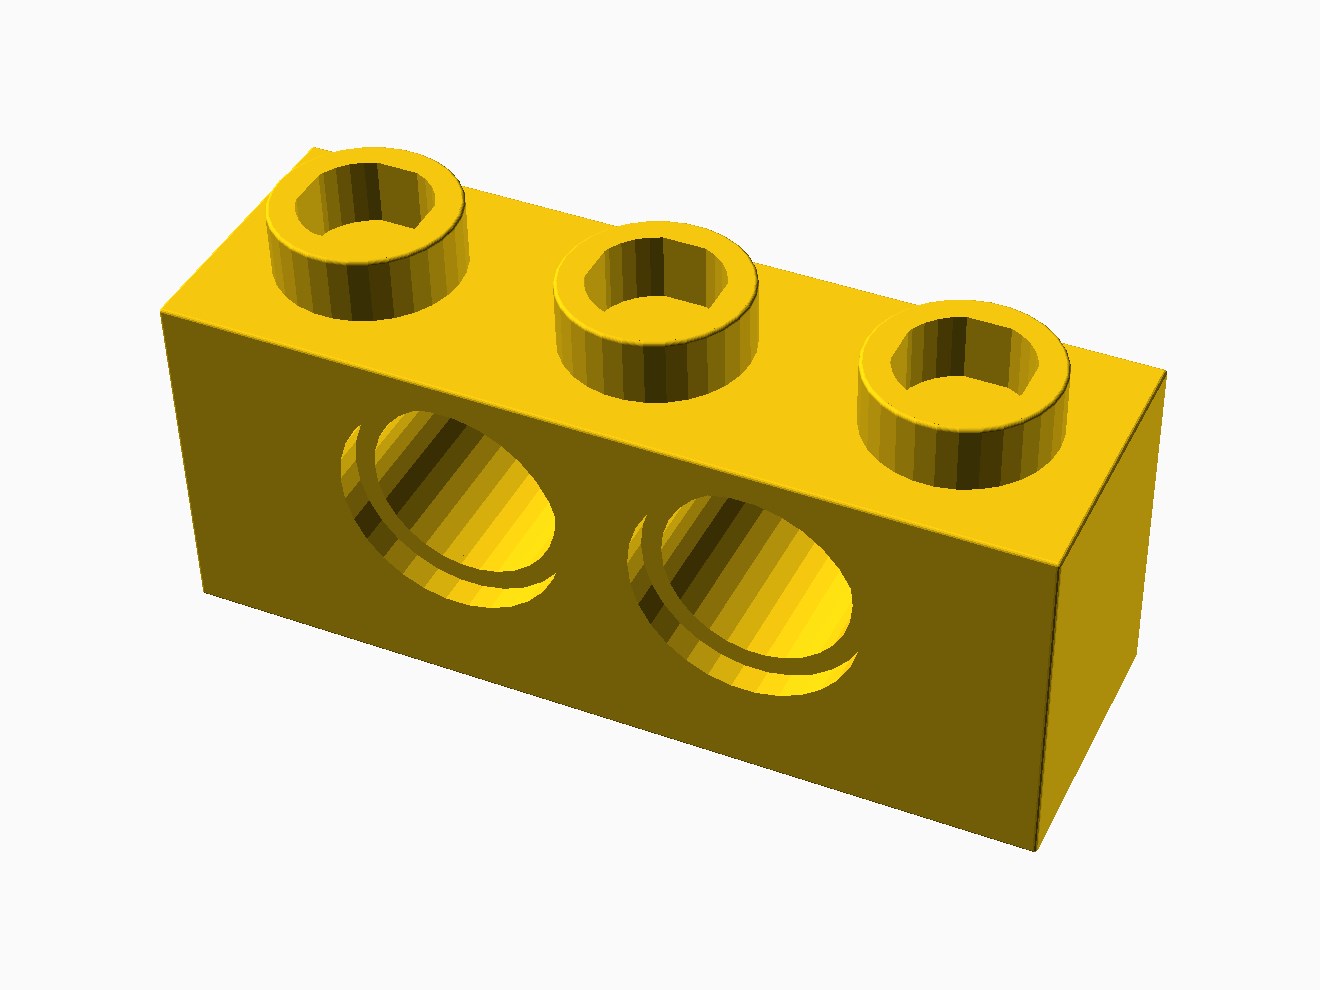 3D printable model of a LEGO Technic 3x1 Brick.